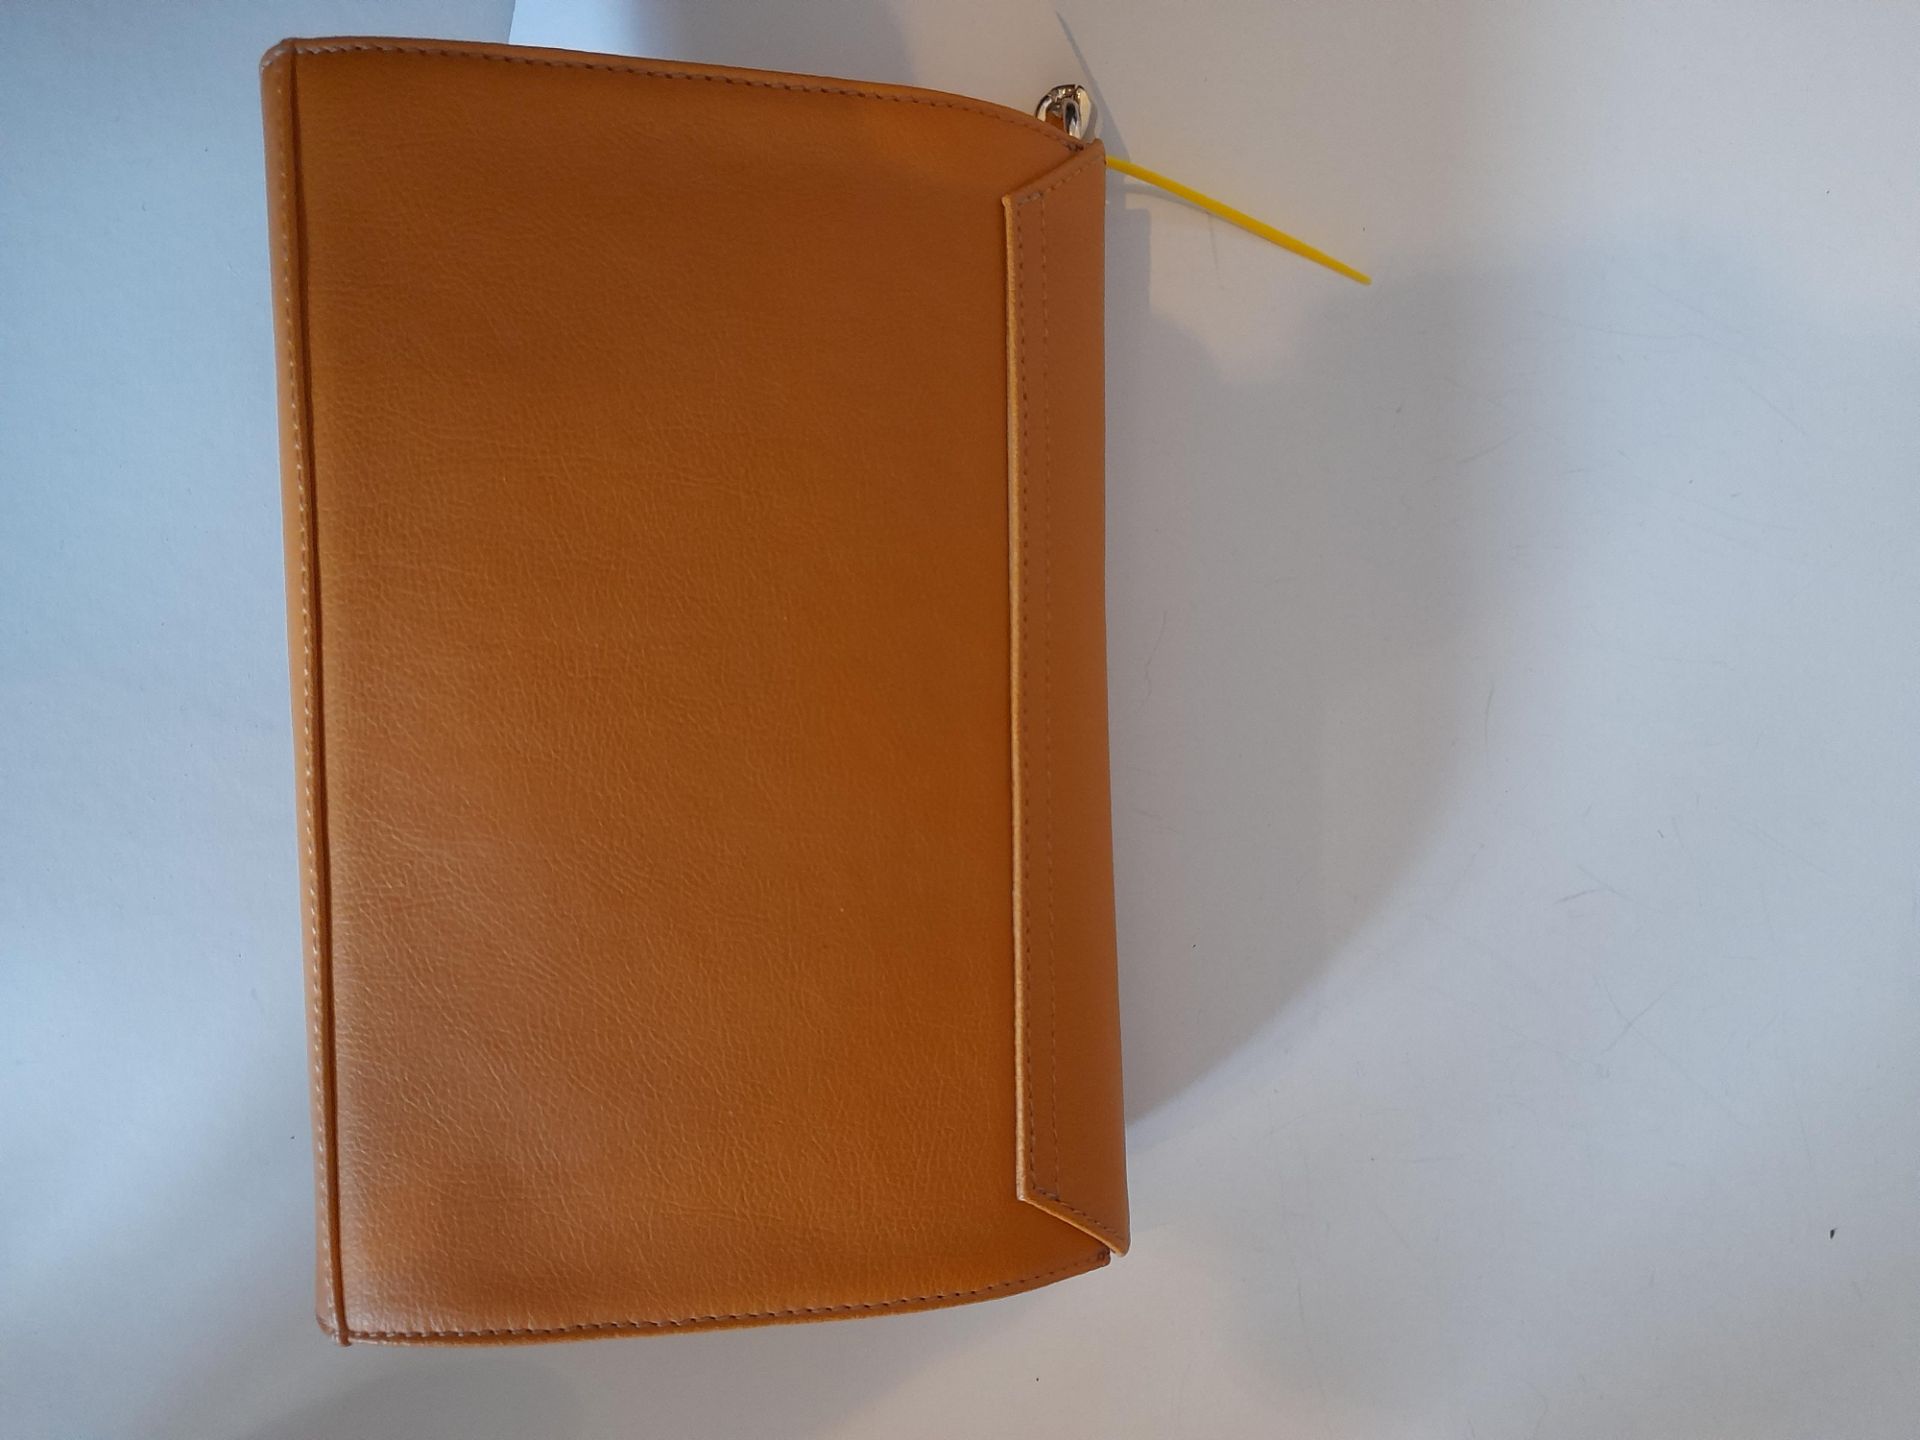 Maviya “Zenn” Orange Vegan Italian Leather Cross Body Bag with Smooth Soft Finish, Faux Suede Lining - Image 2 of 3